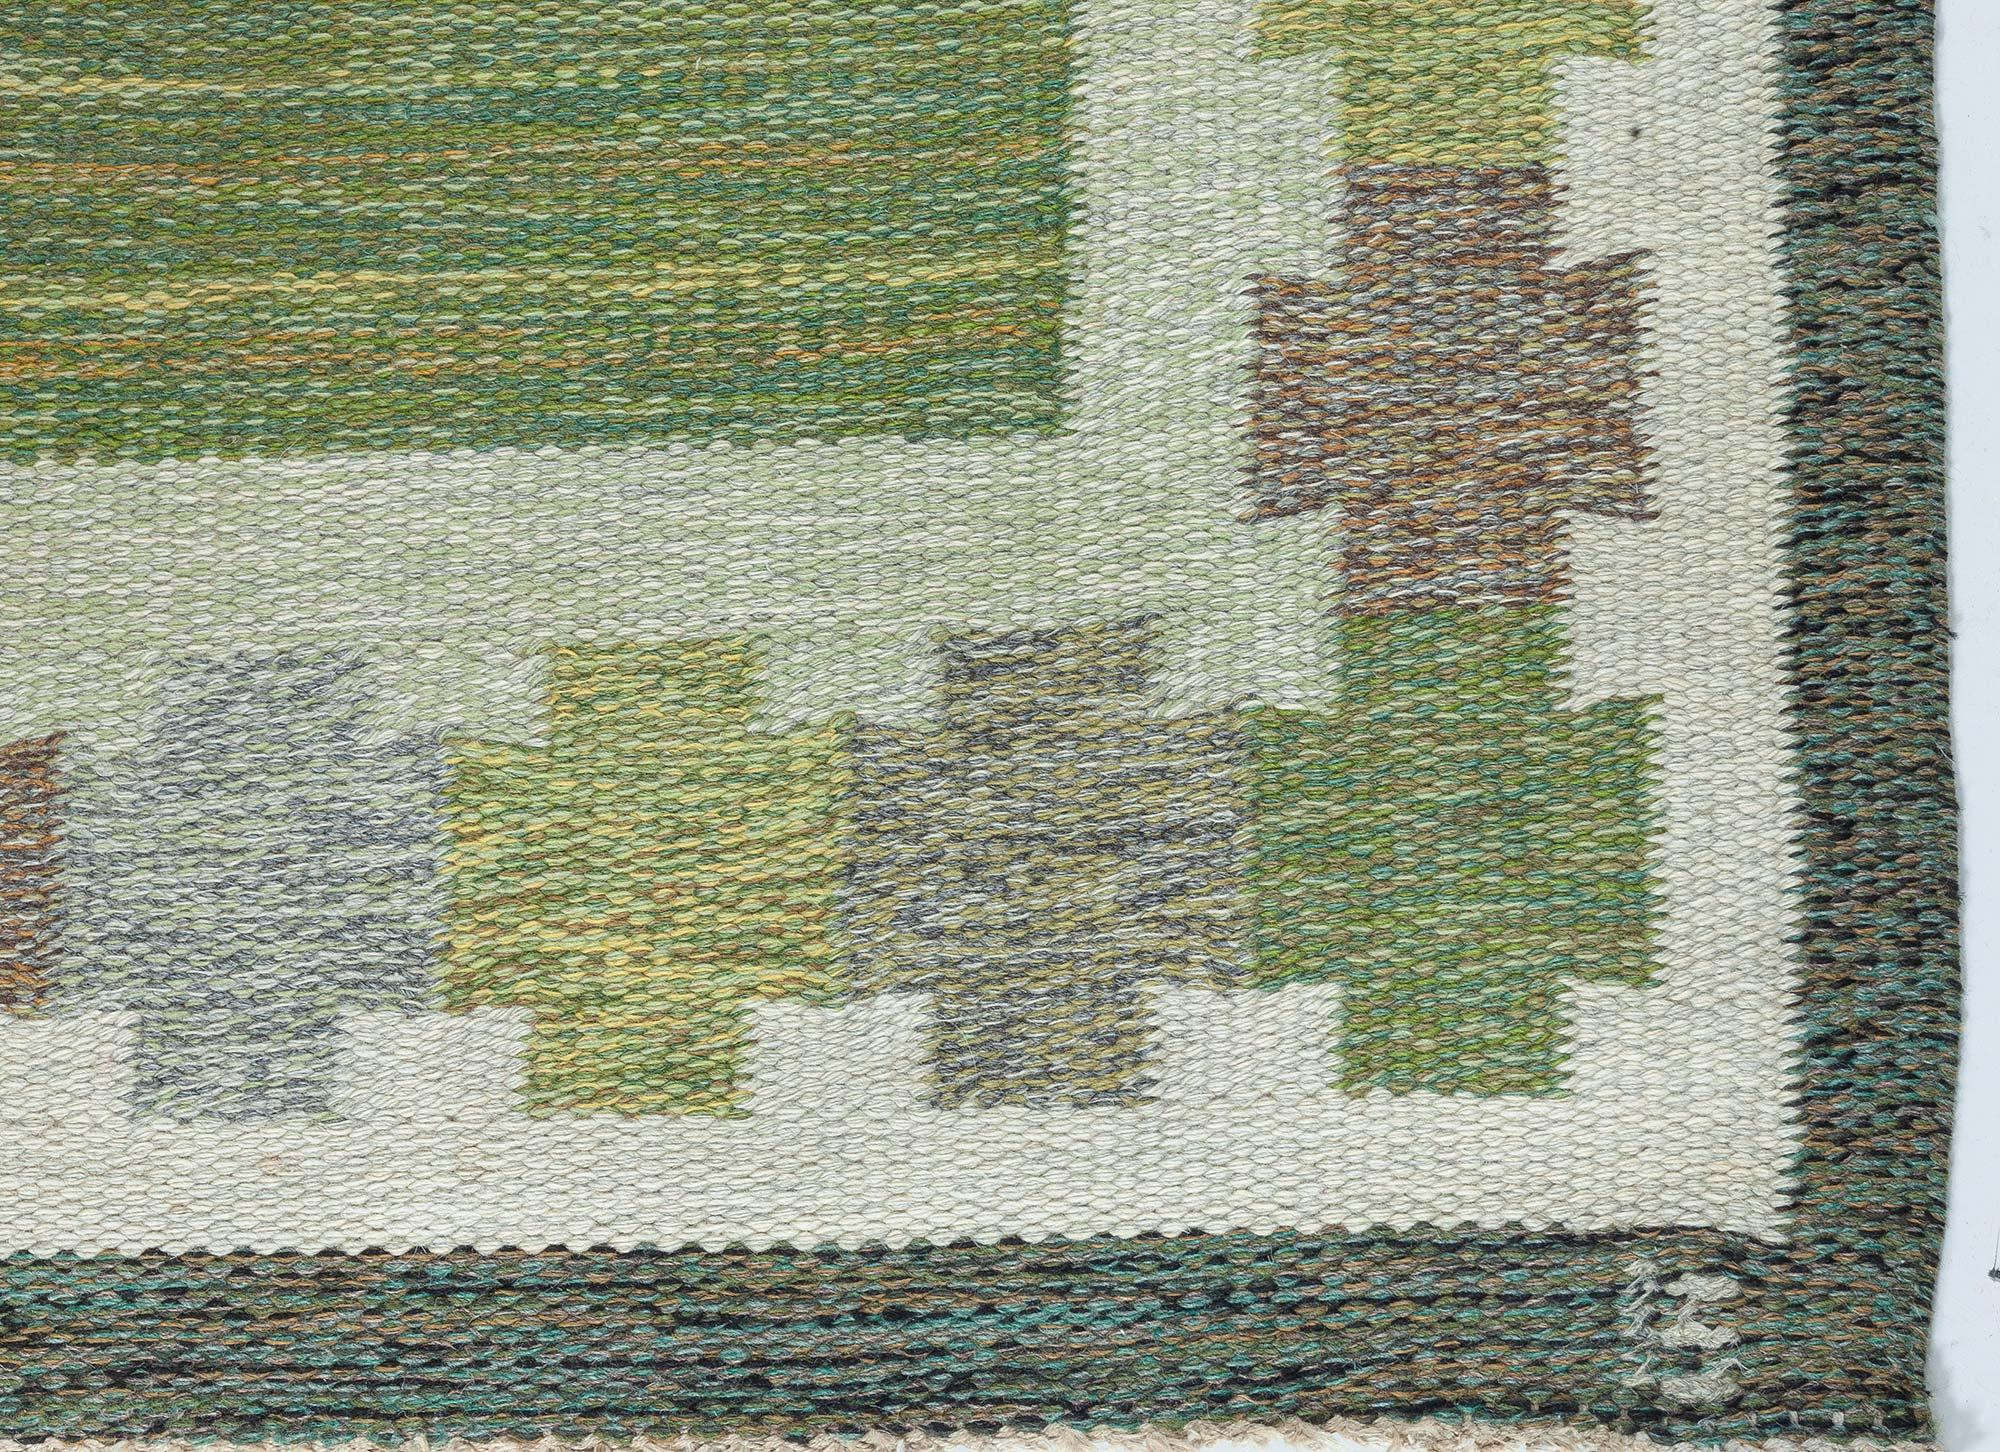 Midcentury Swedish green flat woven rug by Ingegerd Silow at Doris Leslie Blau
Size: 5'10